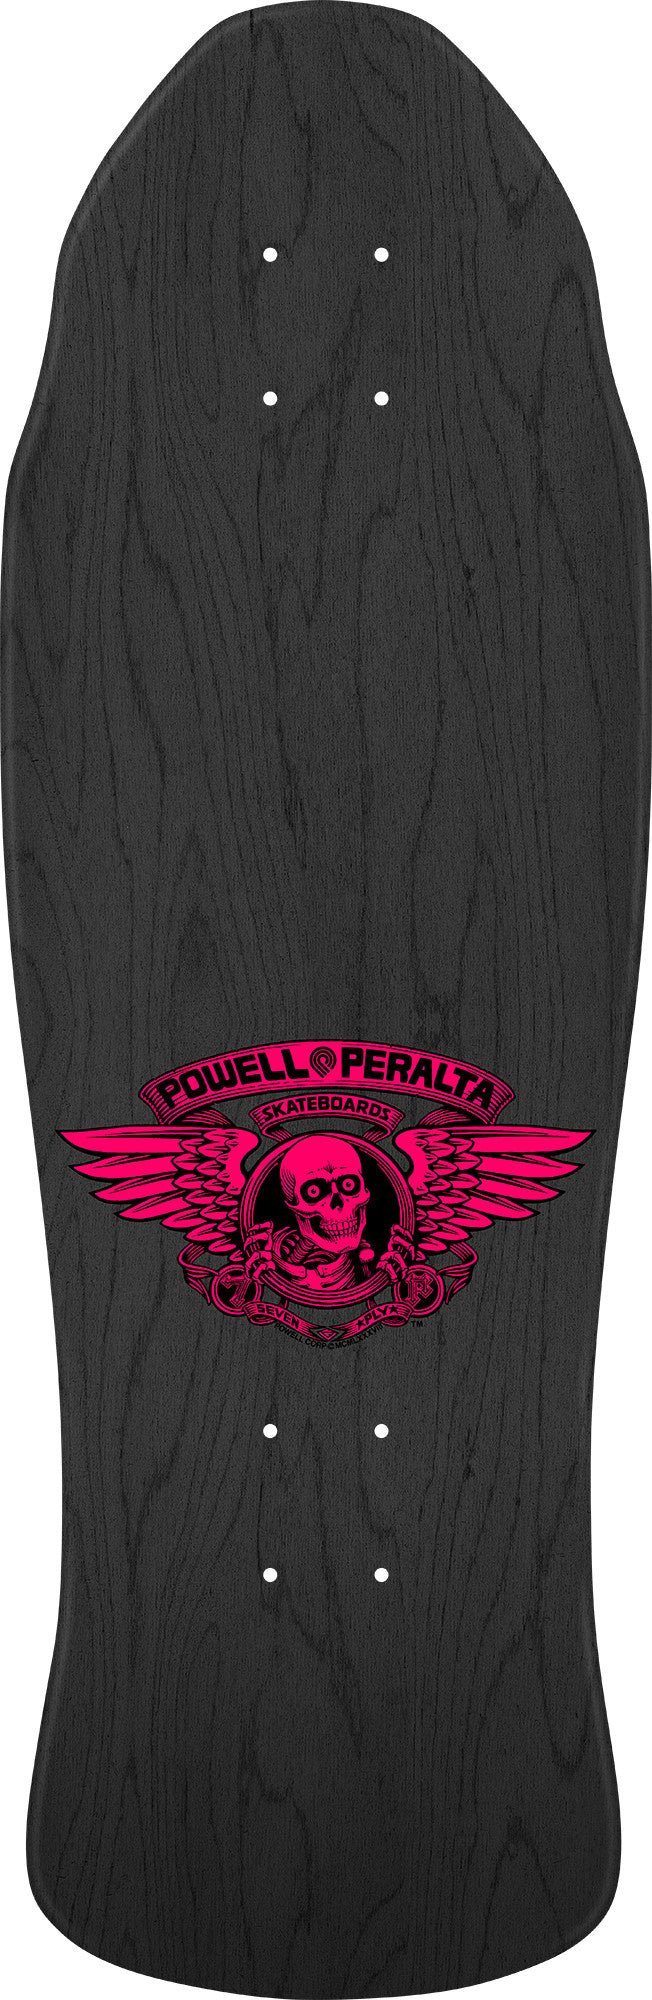 Powell Peralta Steve Caballero Street Reissue Skateboard Deck Black Stain - 9.625 x 29.75 - SkateTillDeath.com